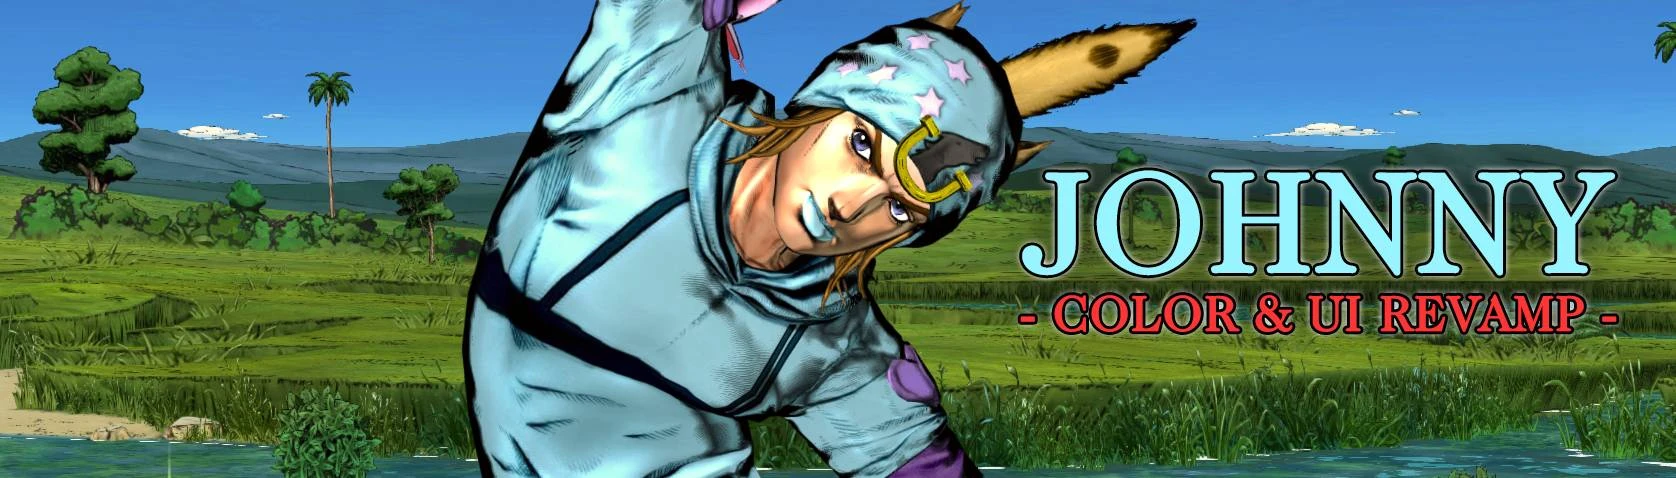 Johnny Joestar and Tusk Manga colors Pack at JoJo's Bizarre Adventure:  All-Star Battle R Nexus - Mods and Community